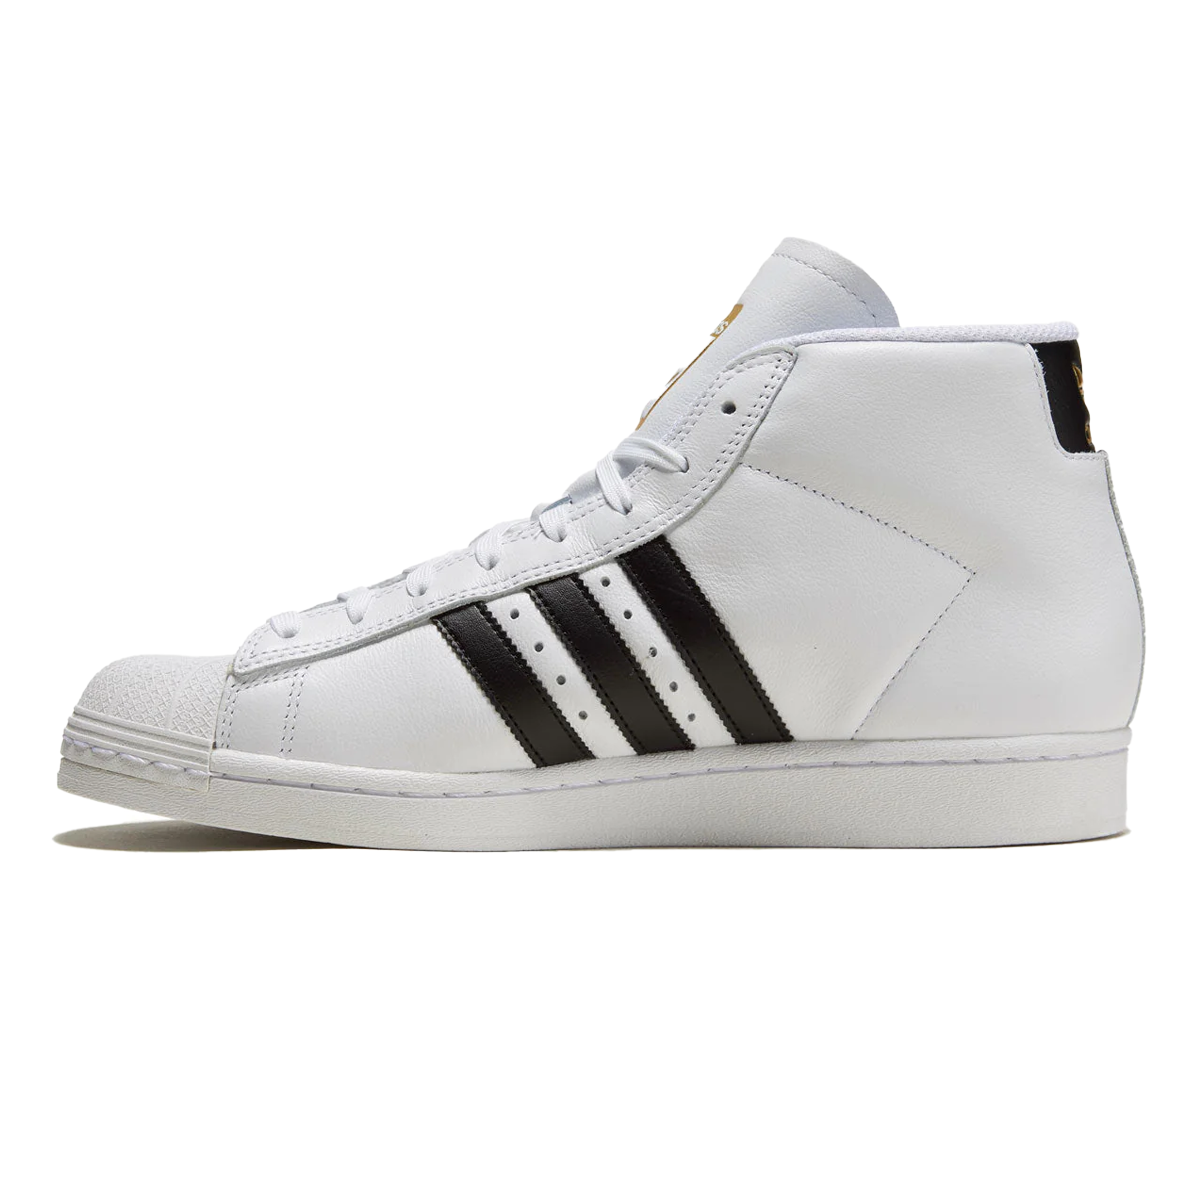 Adidas Pro Model ADV Shoe - White/Core Black